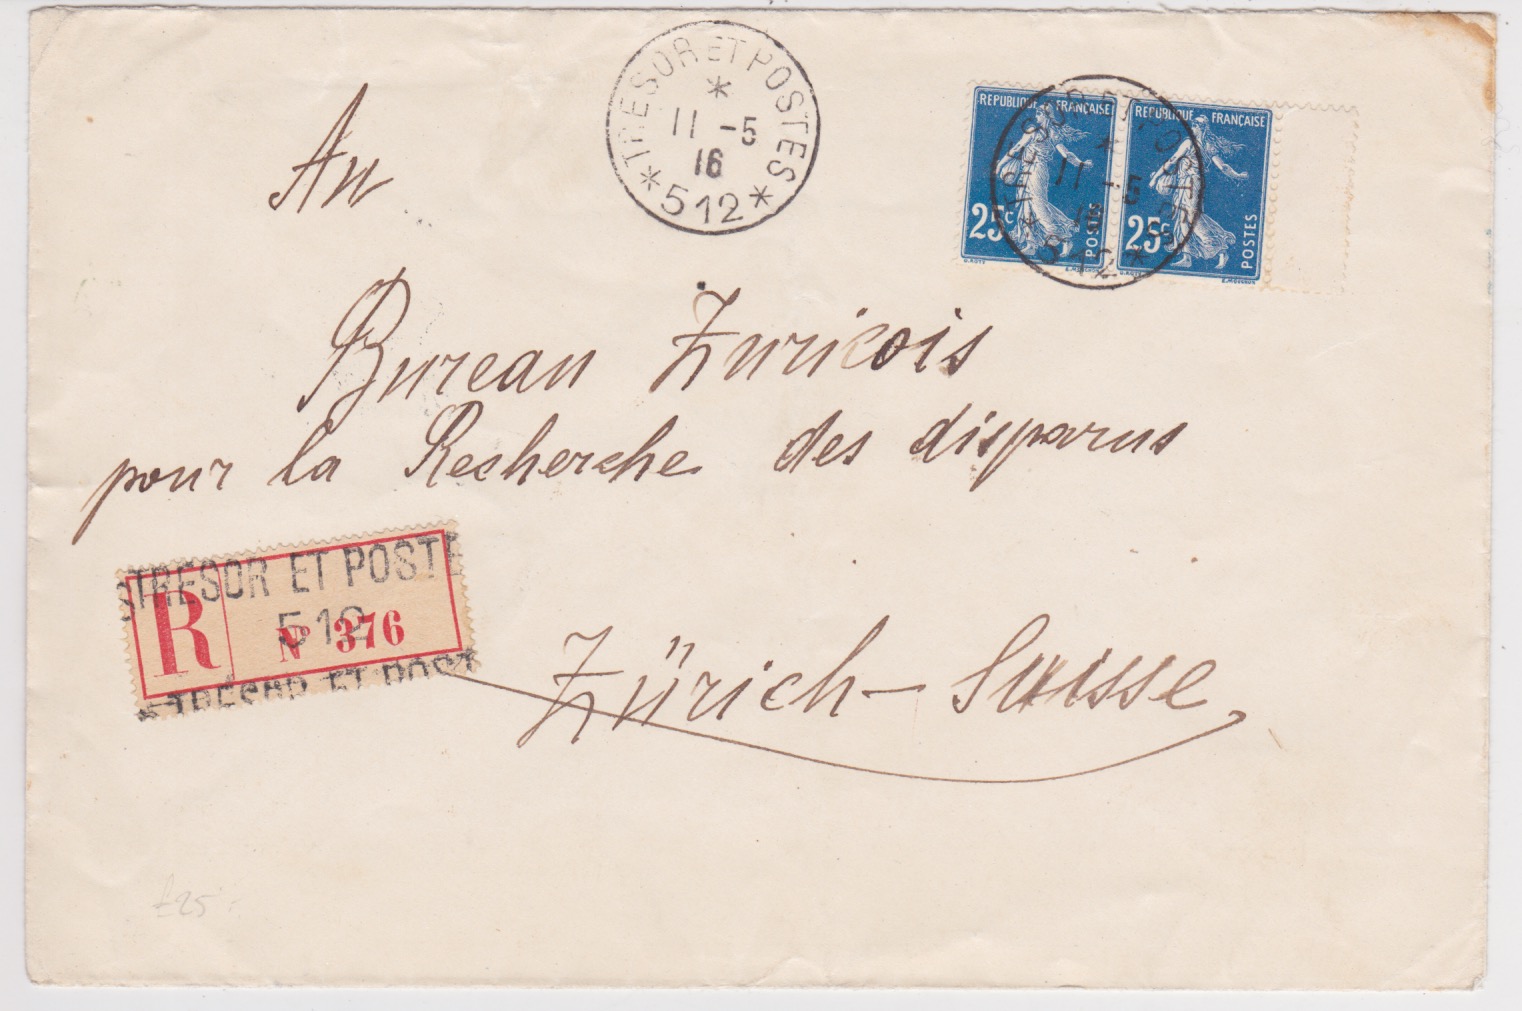 The Serbian Army - In Exile on Corfu - Postal System. Corfu-Zurich-Switzerland.